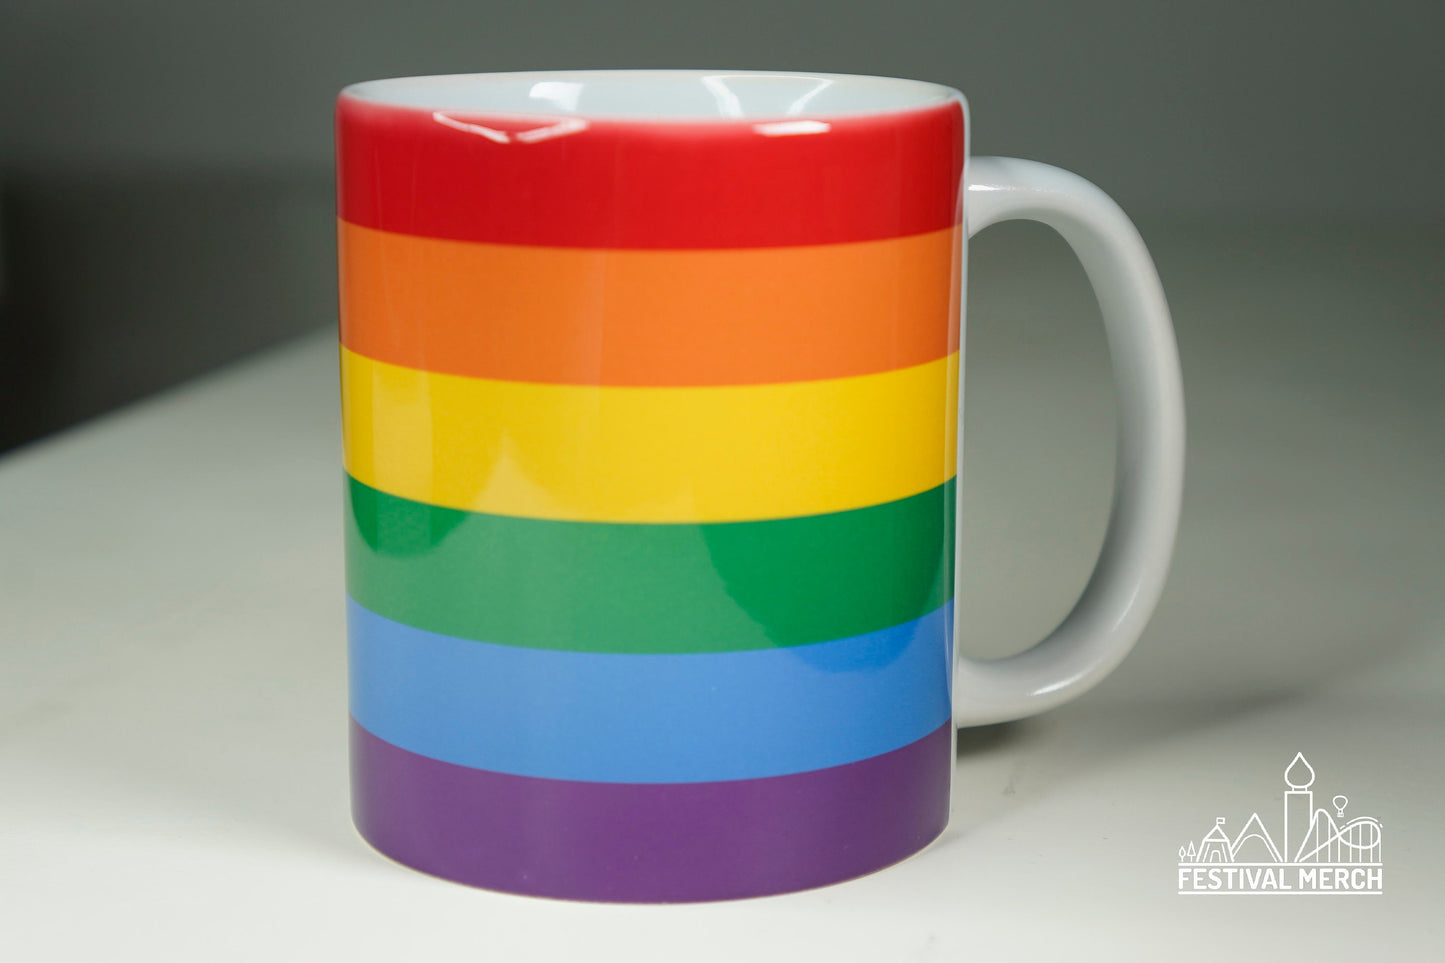 Rainbow Flag Mug (Any Flags available) Discreet Packaging! - Pride gift - LGBT Lesbian Gay Bi ally Transgender - Festival Merch